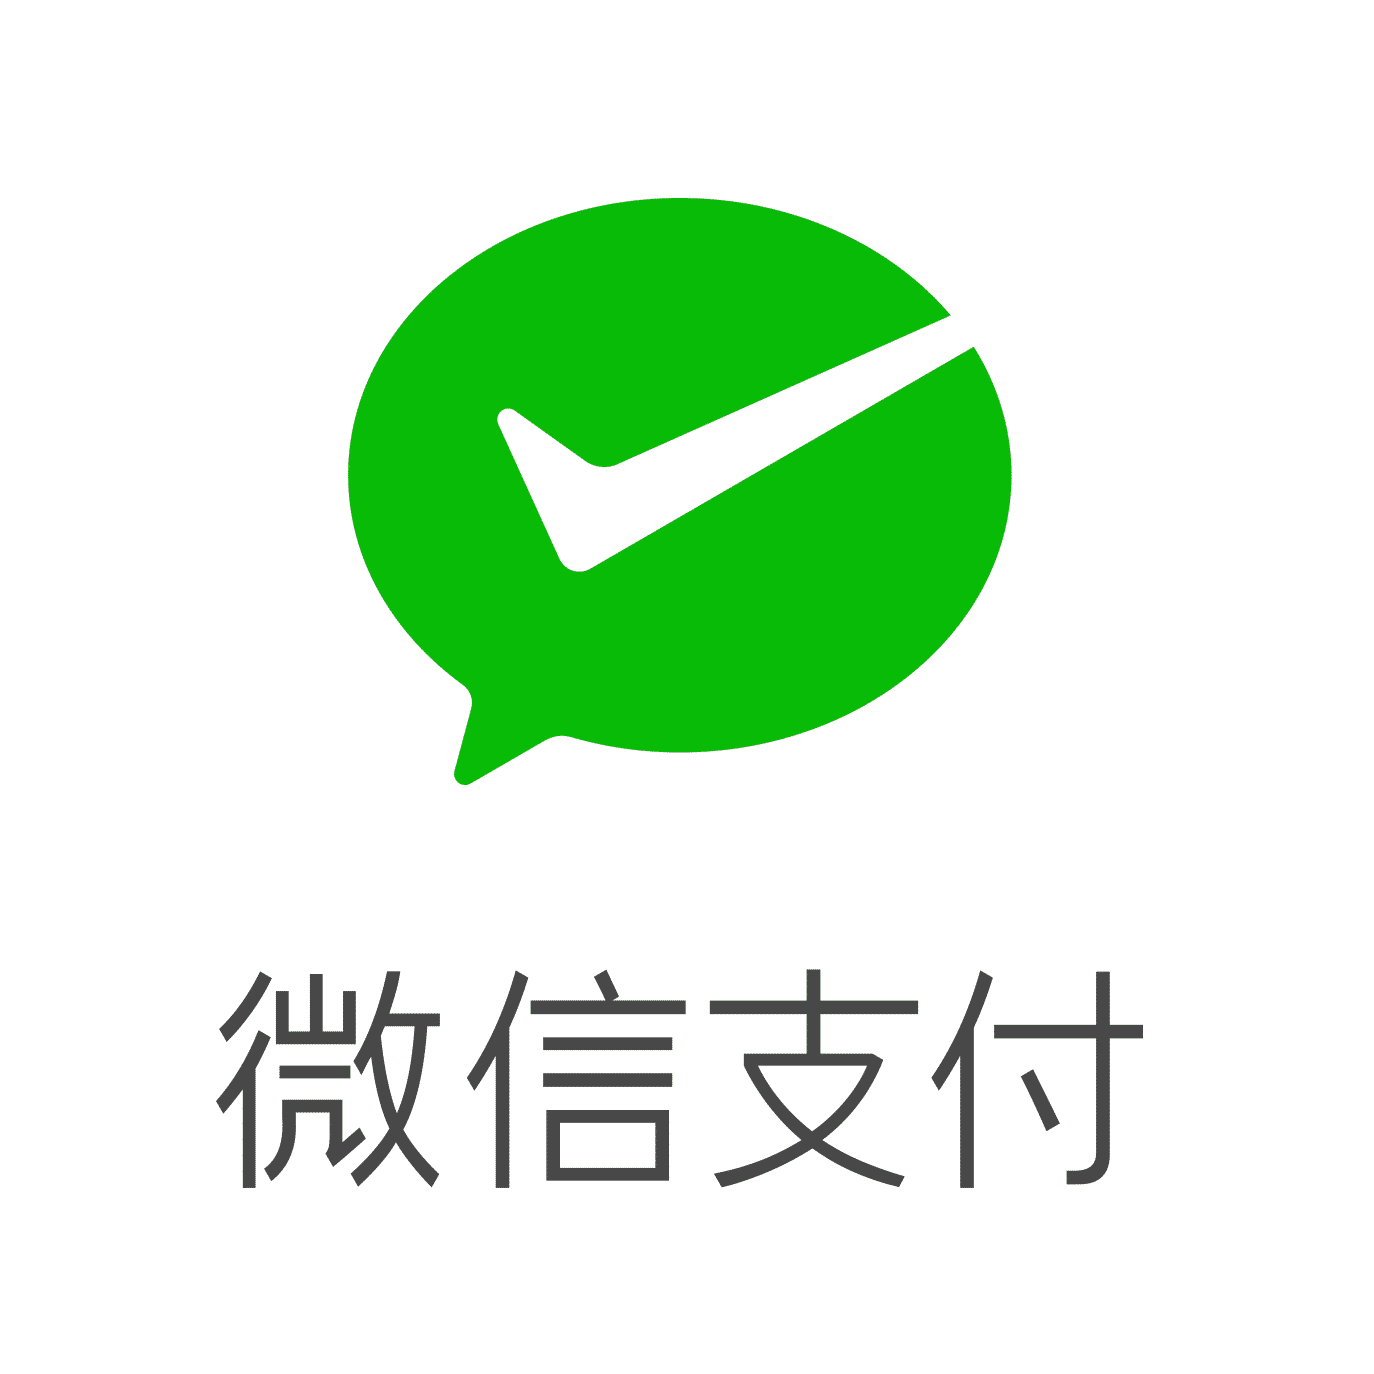 微信支付logo.png